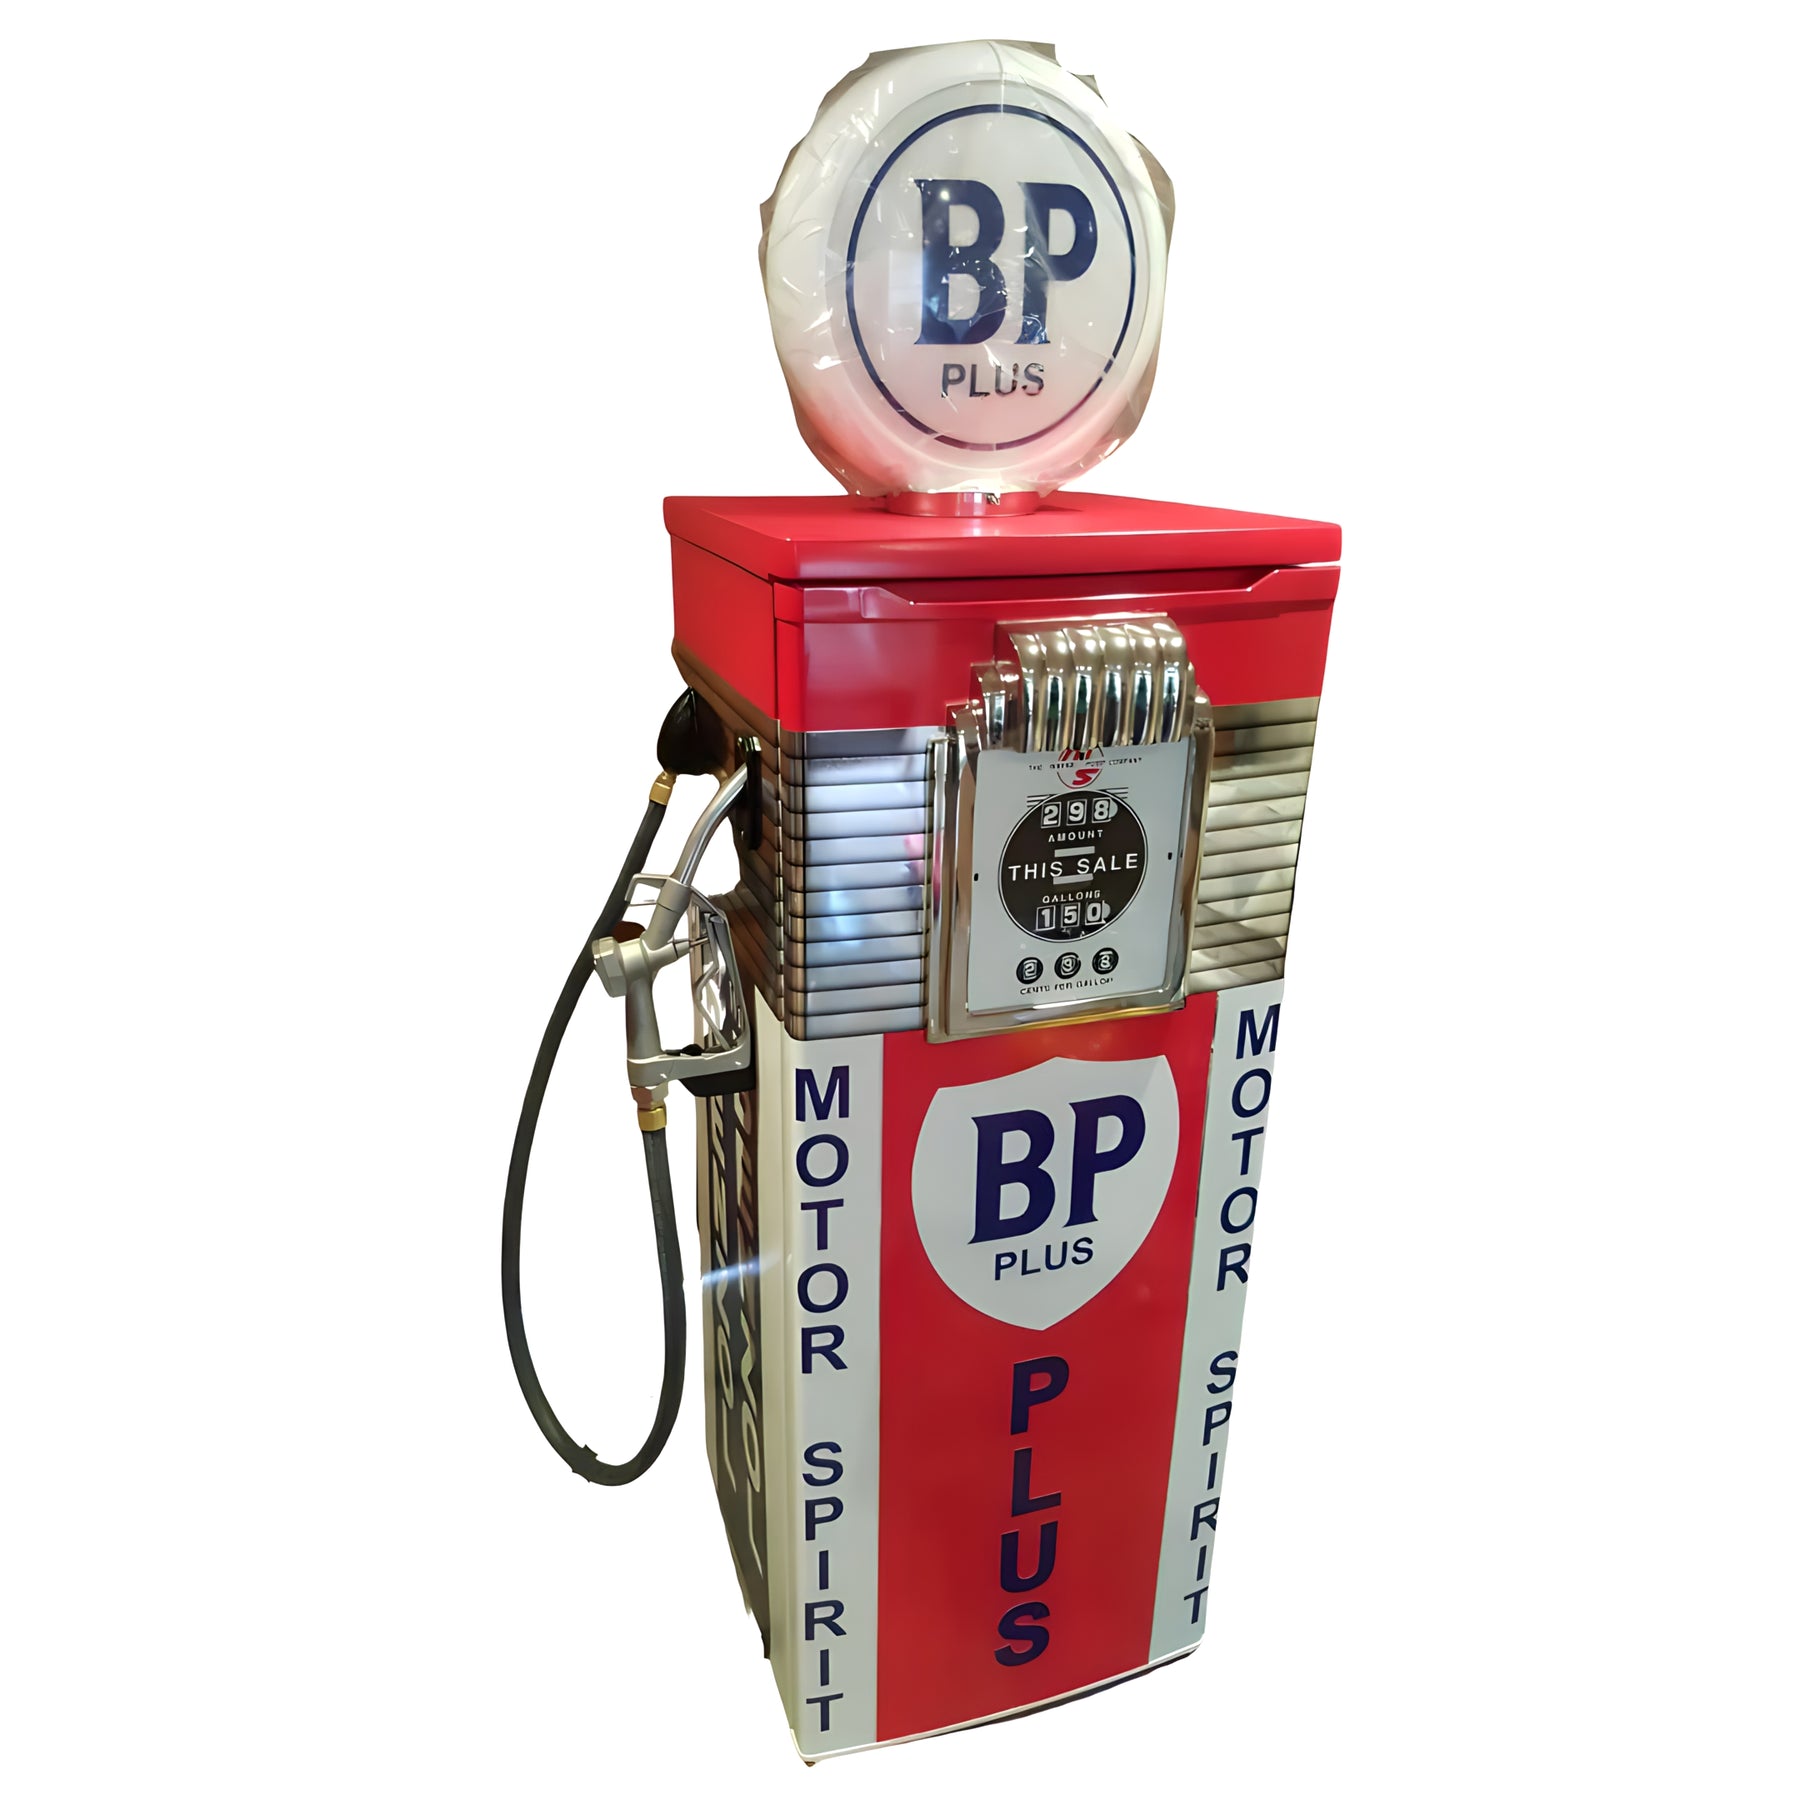 BP Plus Retro Petrol Bowser Fridge